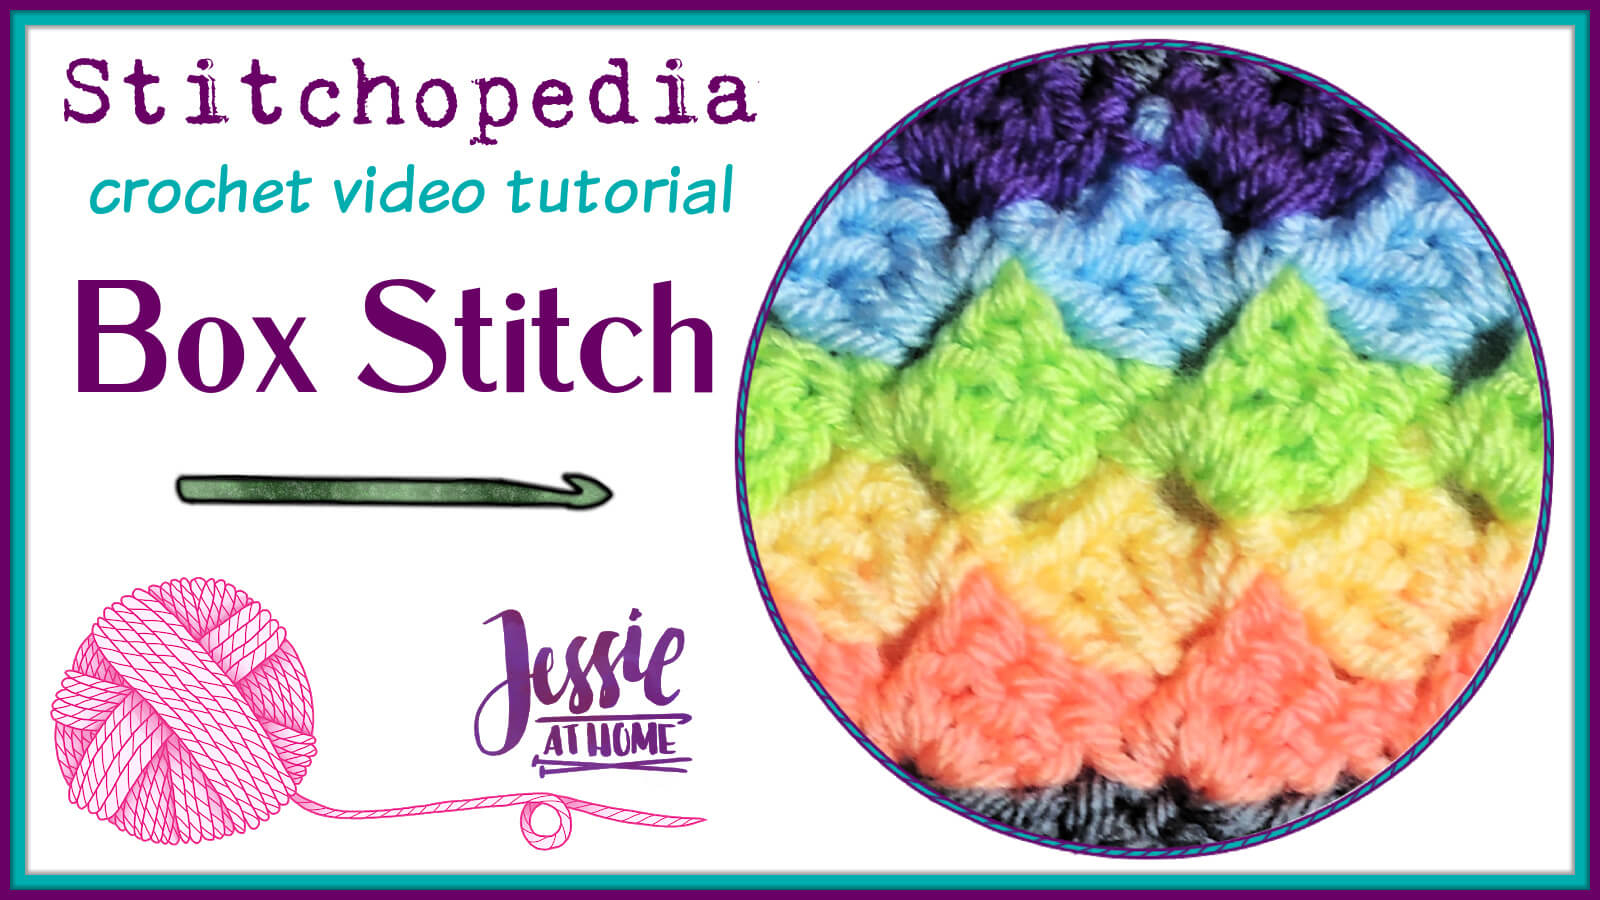 Box Stitch Stitchopedia Crochet Video Tutorial by Jessie At Home - Cover